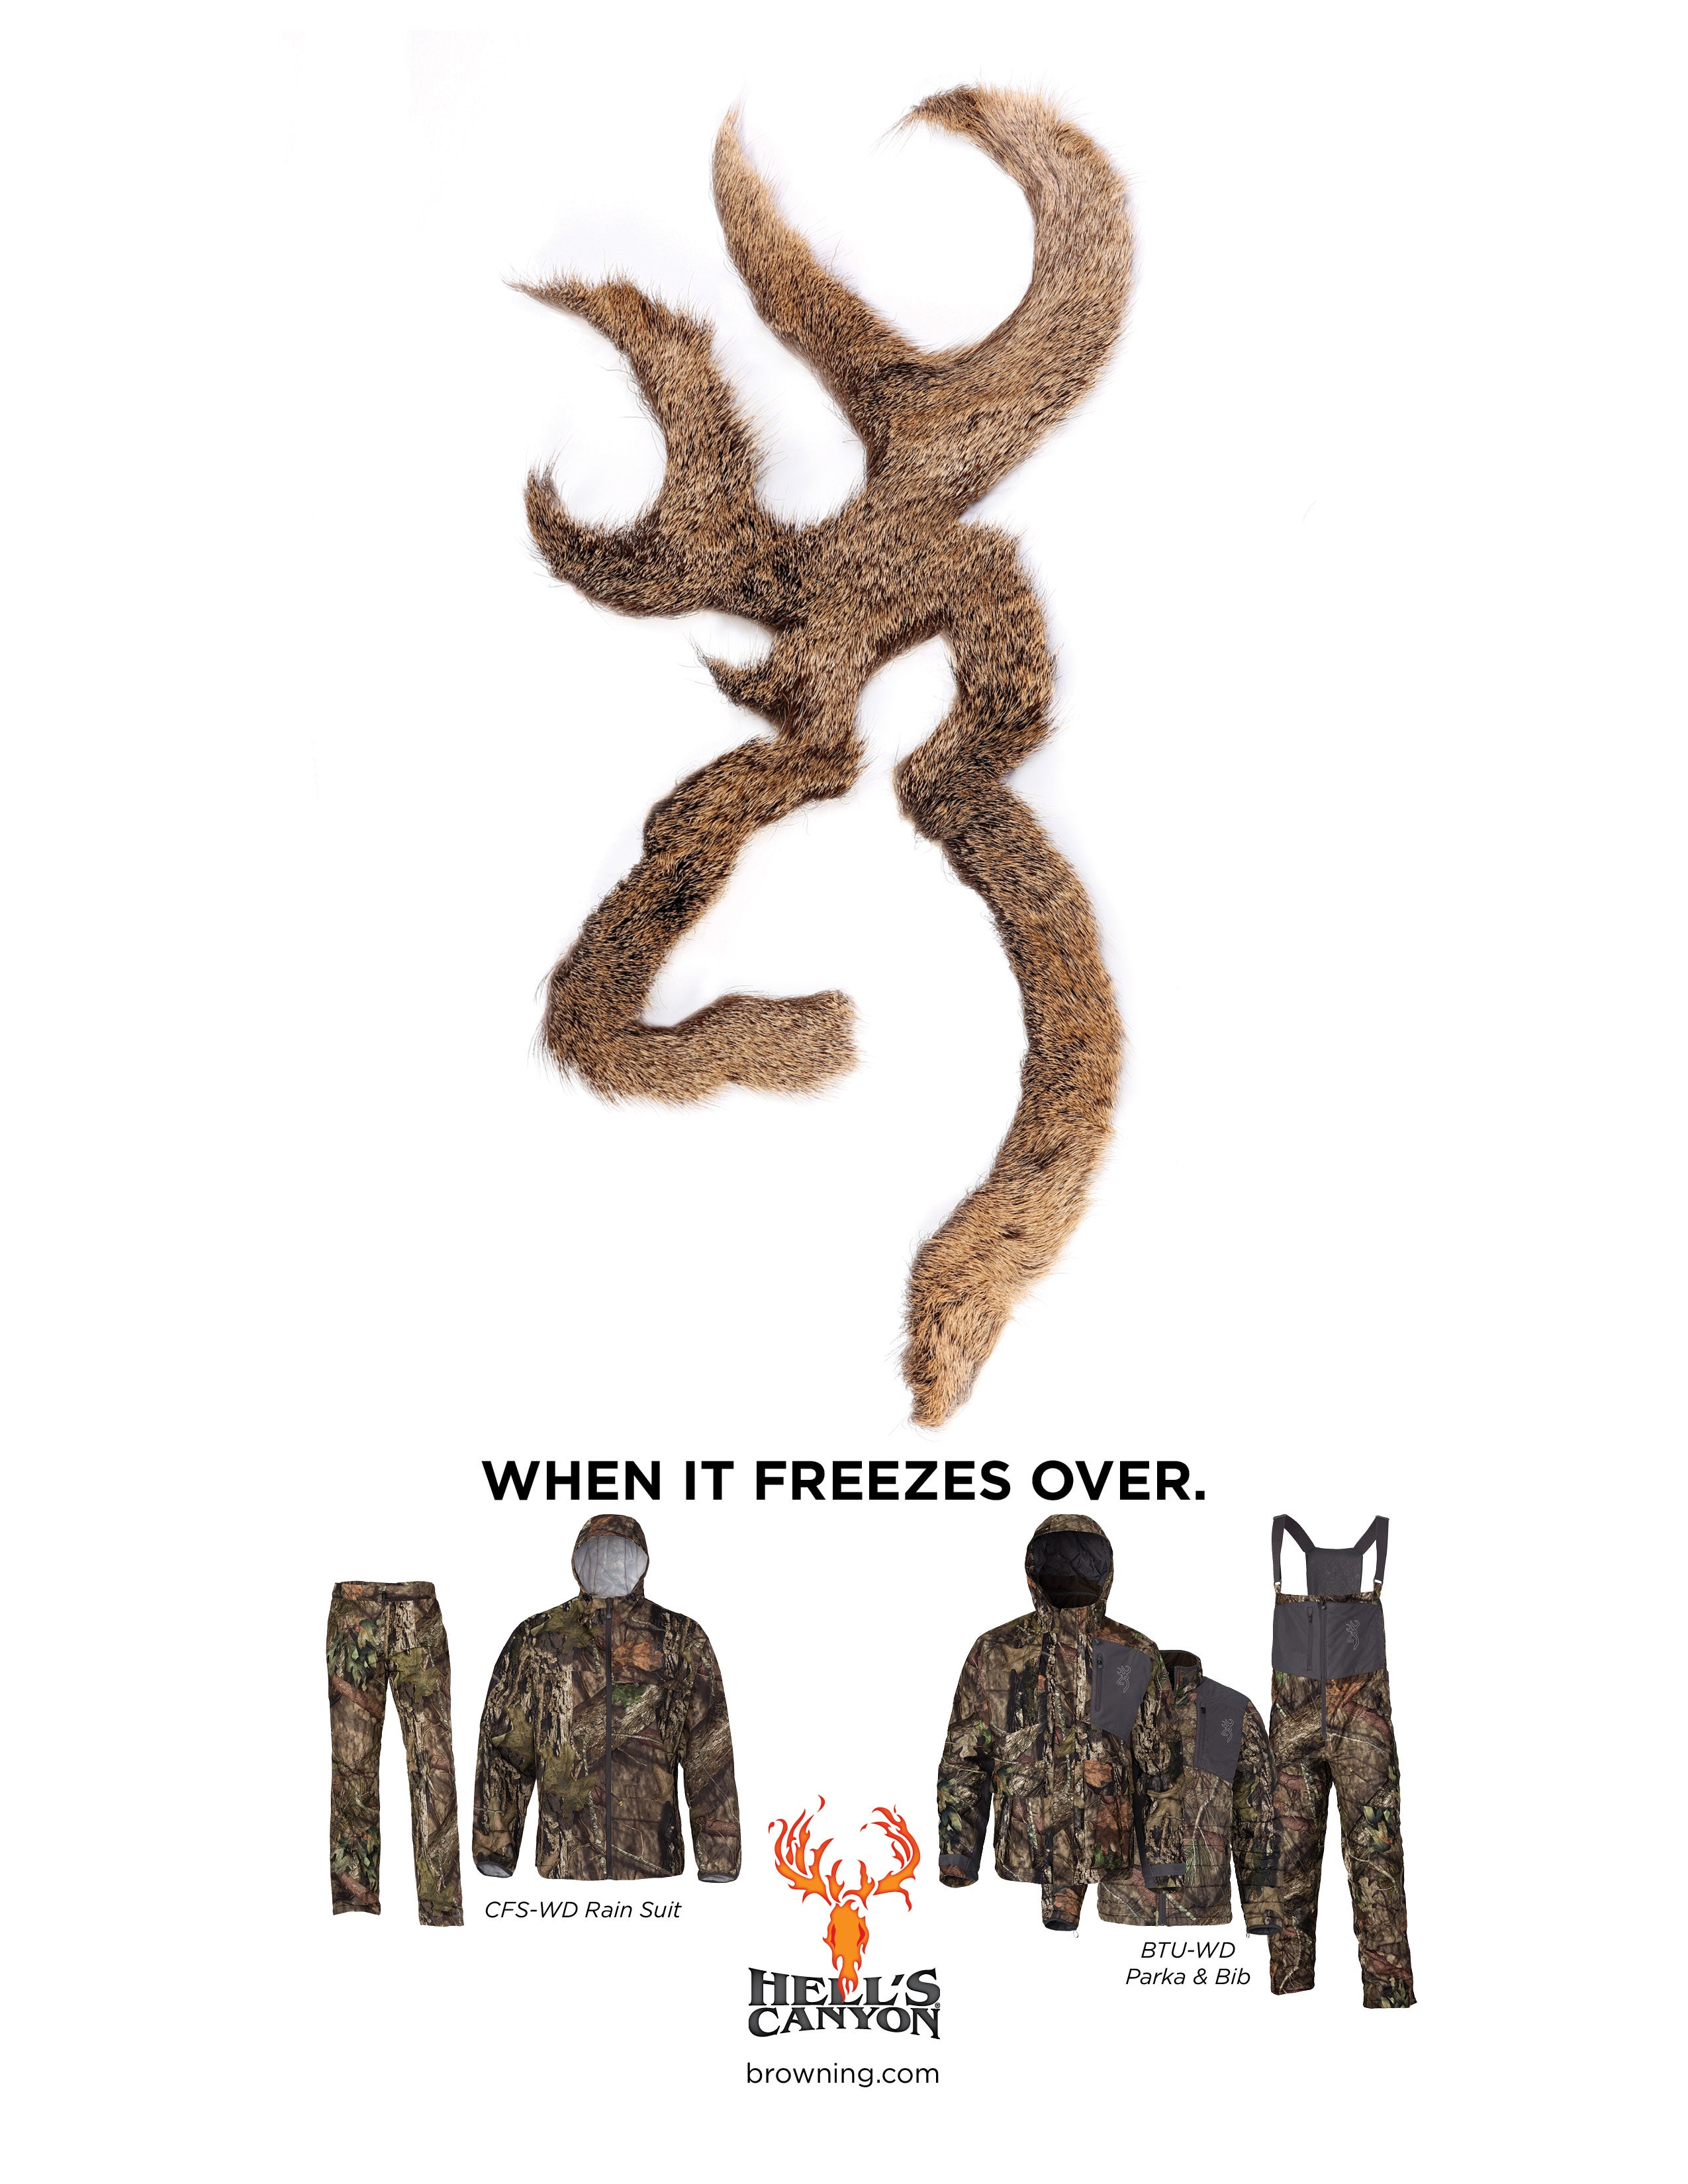 Deer Hair Buckmark Logo with Hell's Canyon Clothing